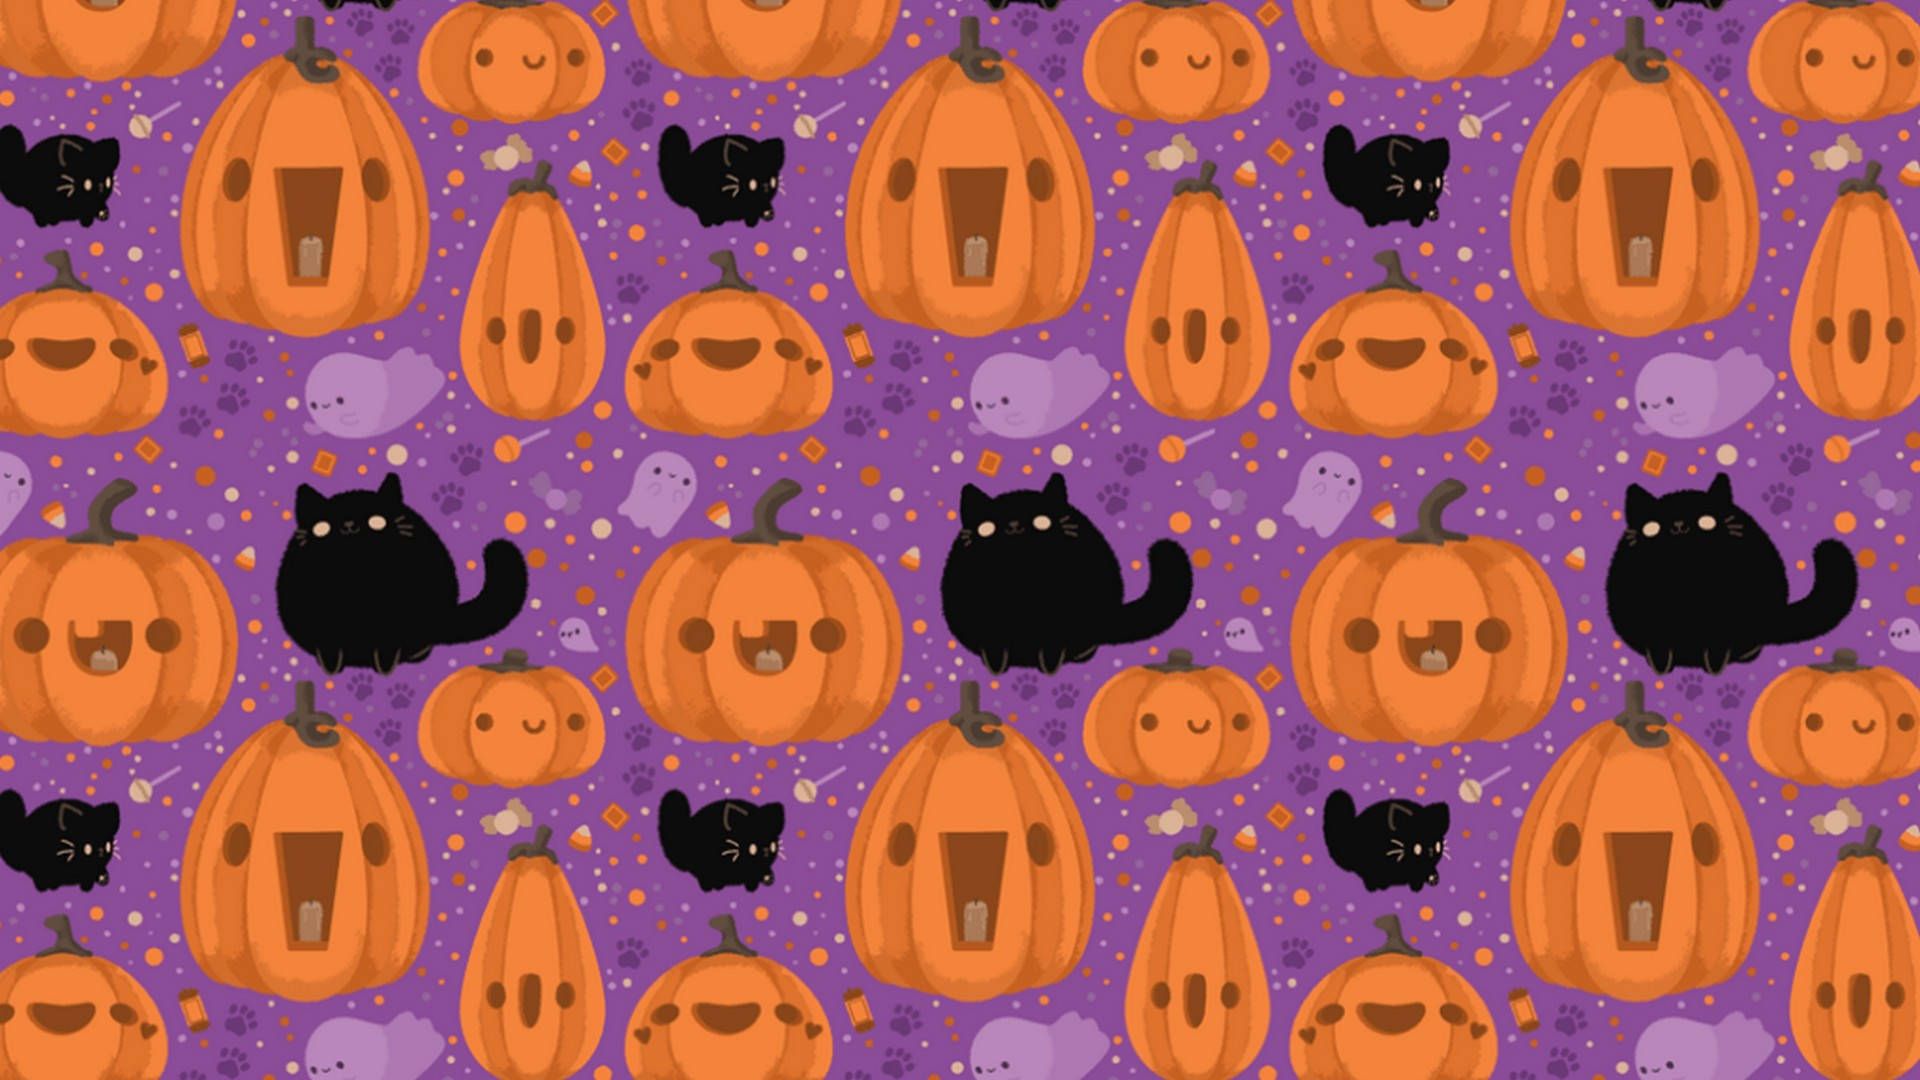 Download Cute Aesthetic Halloween Cats And Pumpkins Wallpaper